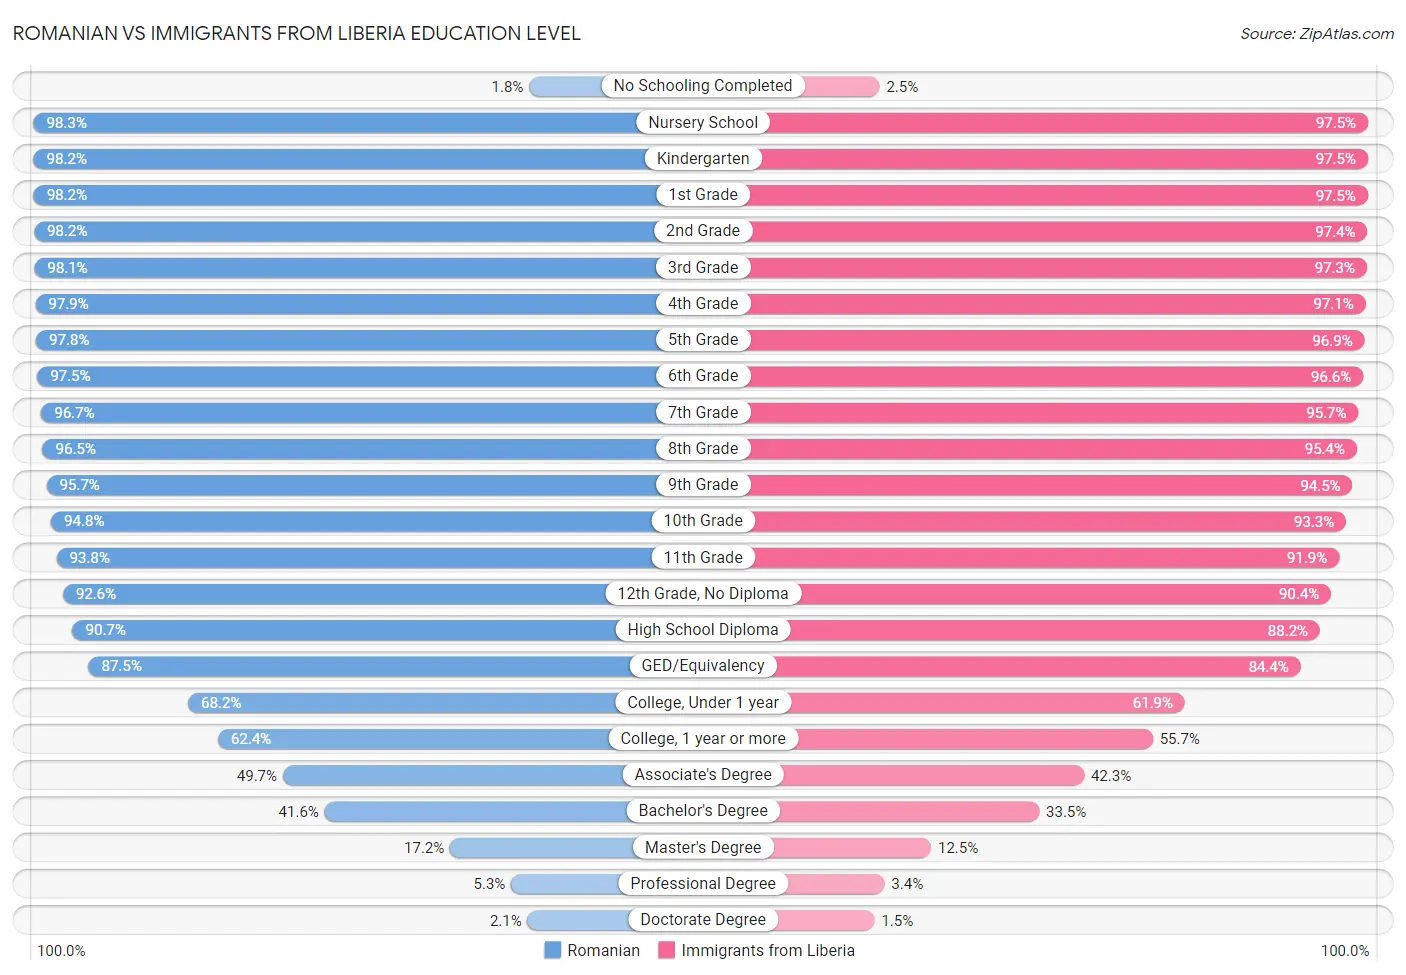 Romanian vs Immigrants from Liberia Education Level